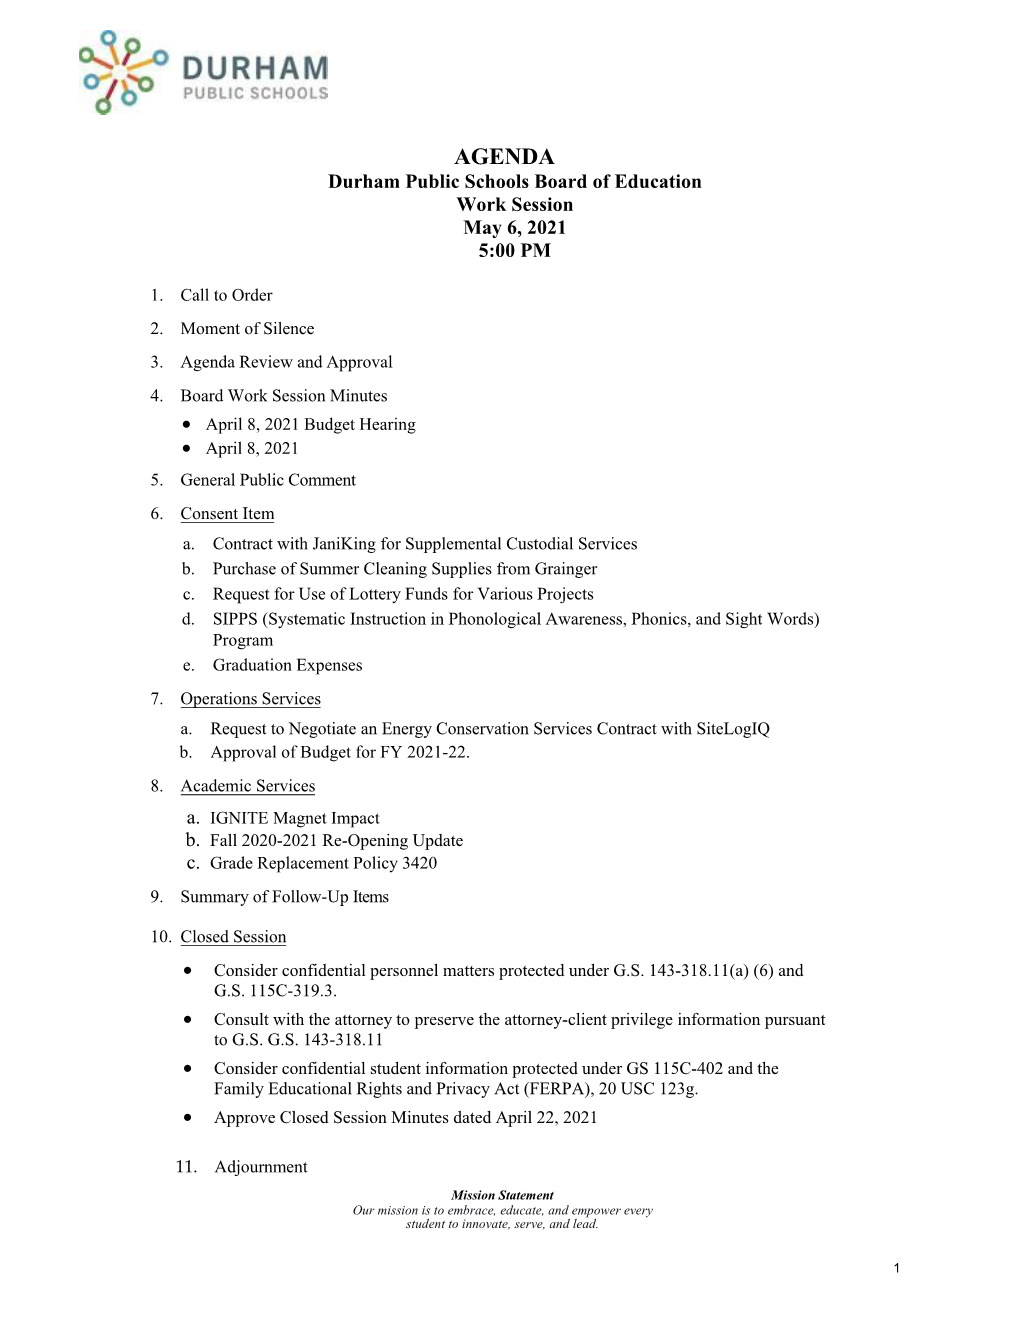 AGENDA Durham Public Schools Board of Education Work Session May 6, 2021 5:00 PM